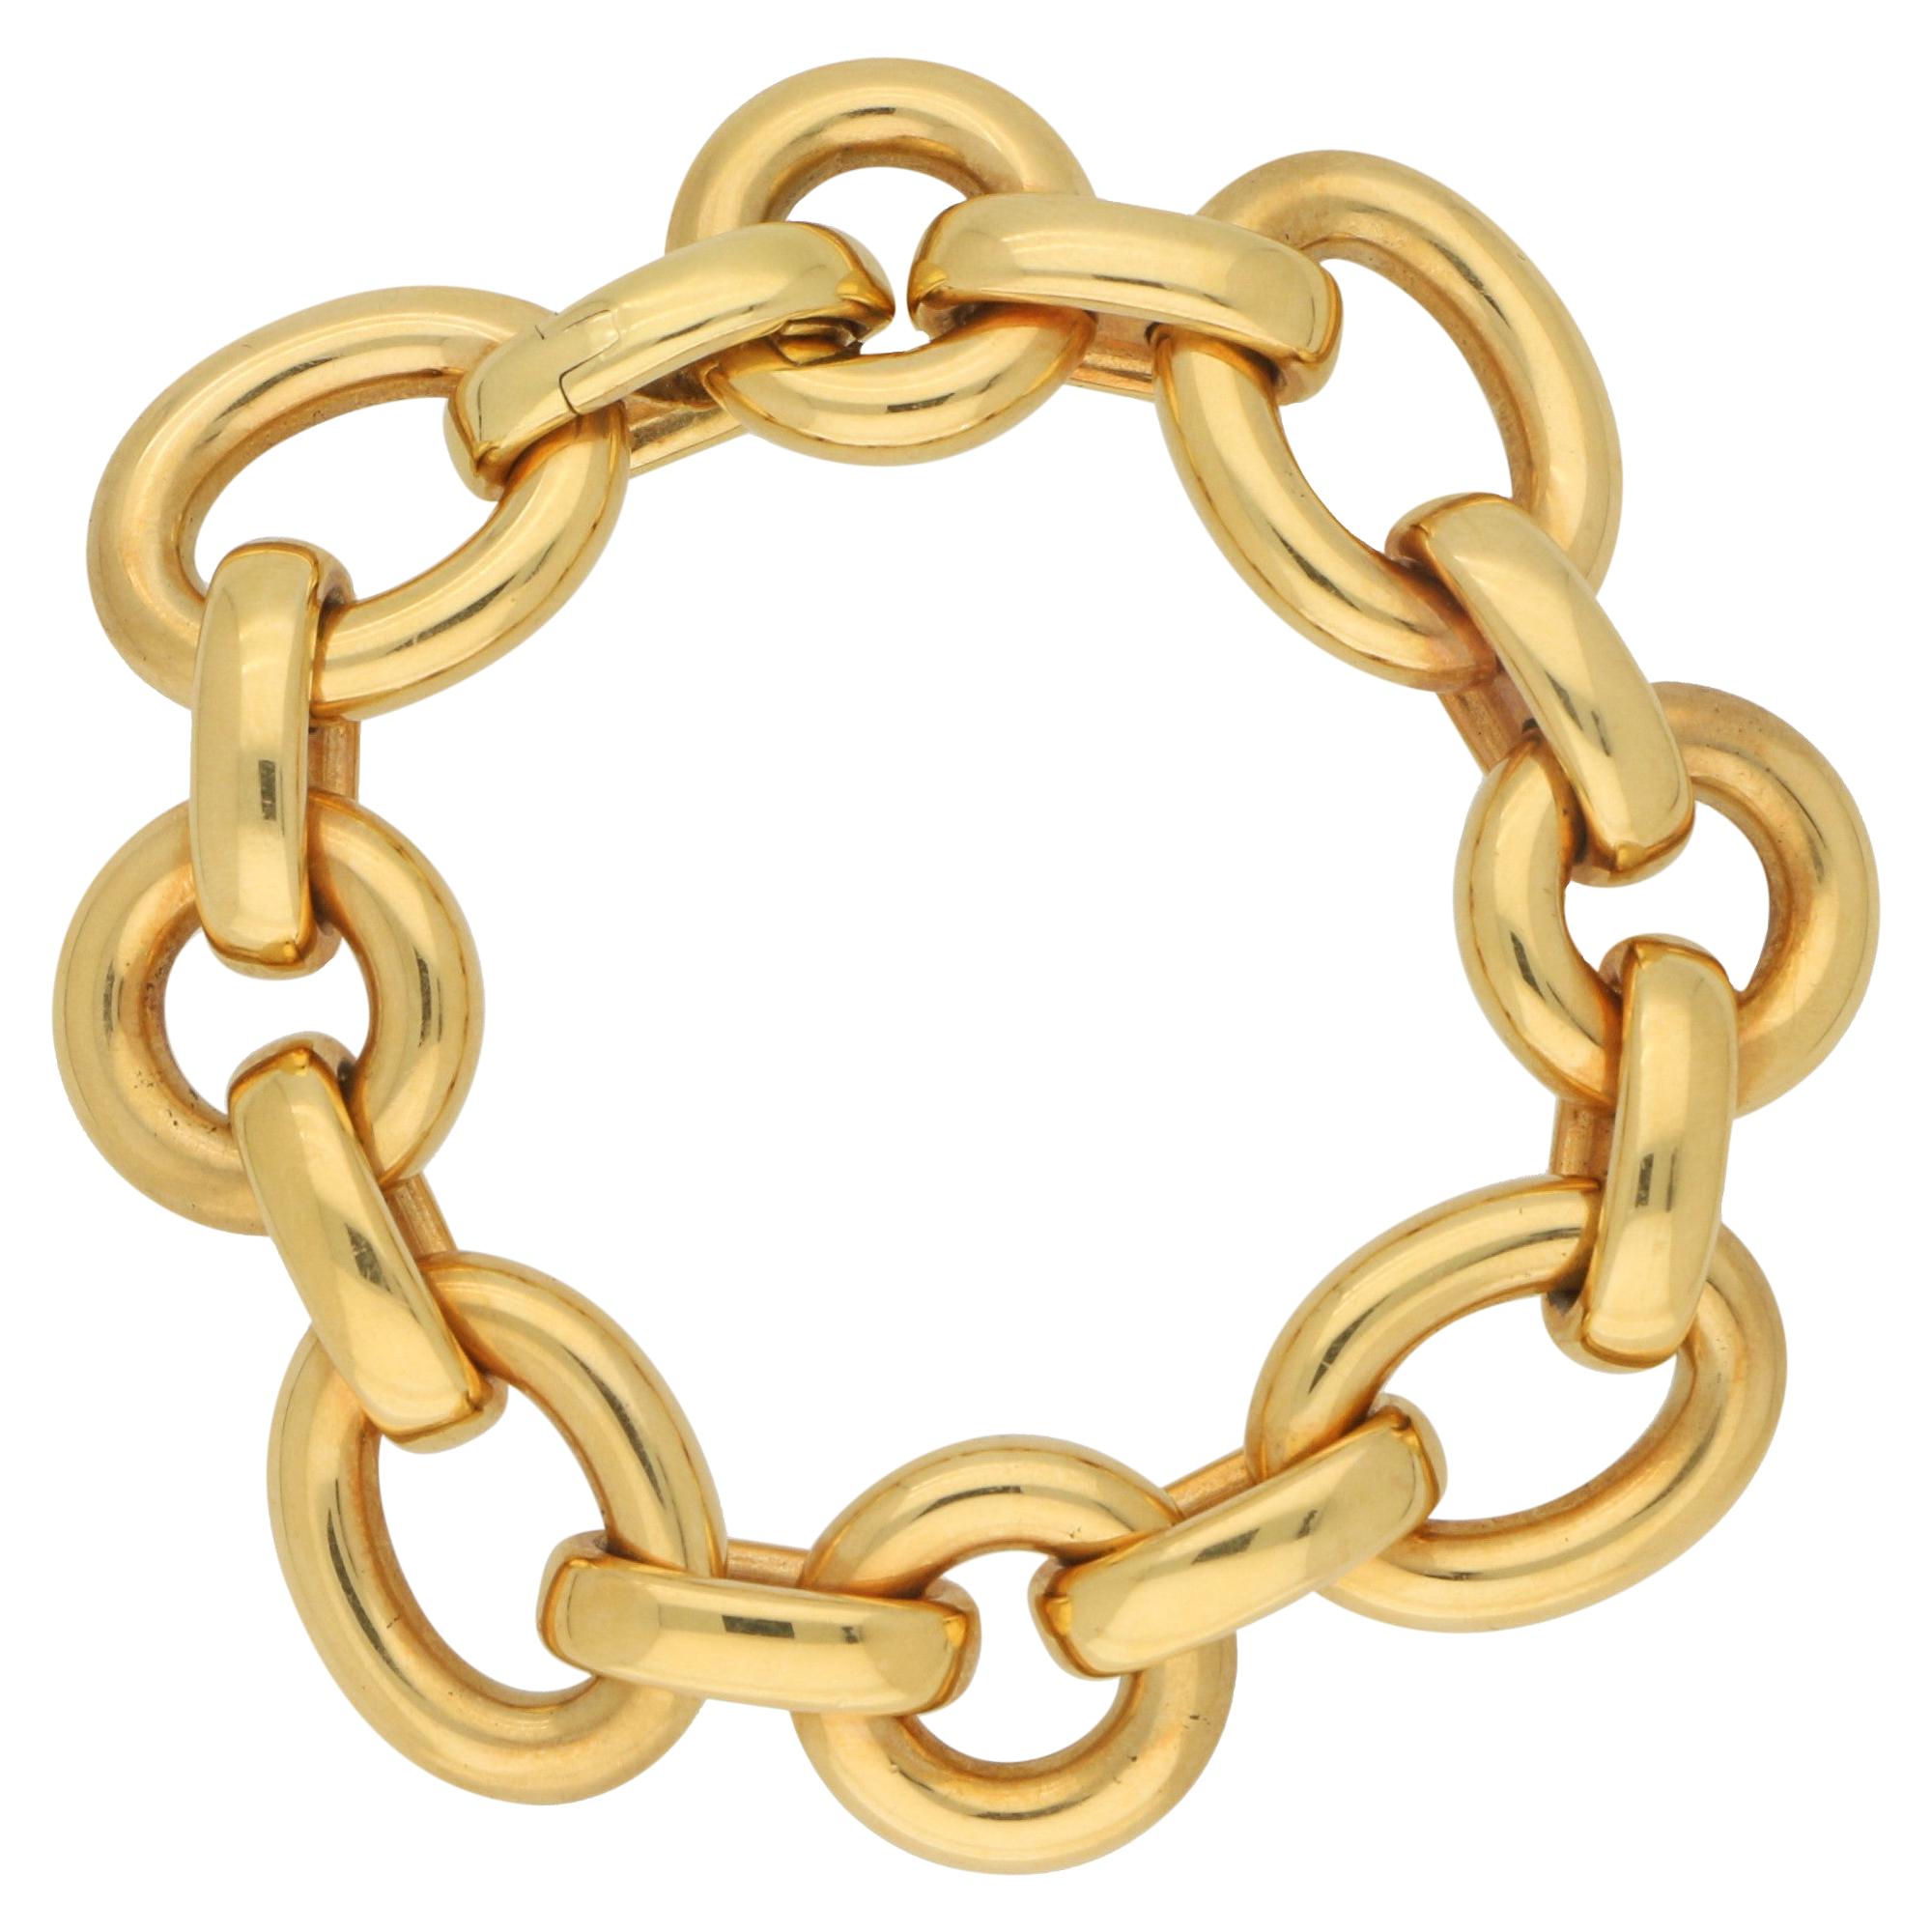 Chaumet Paris Chunky Chain Link Retro Bracelet Set in 18 Karat Yellow Gold